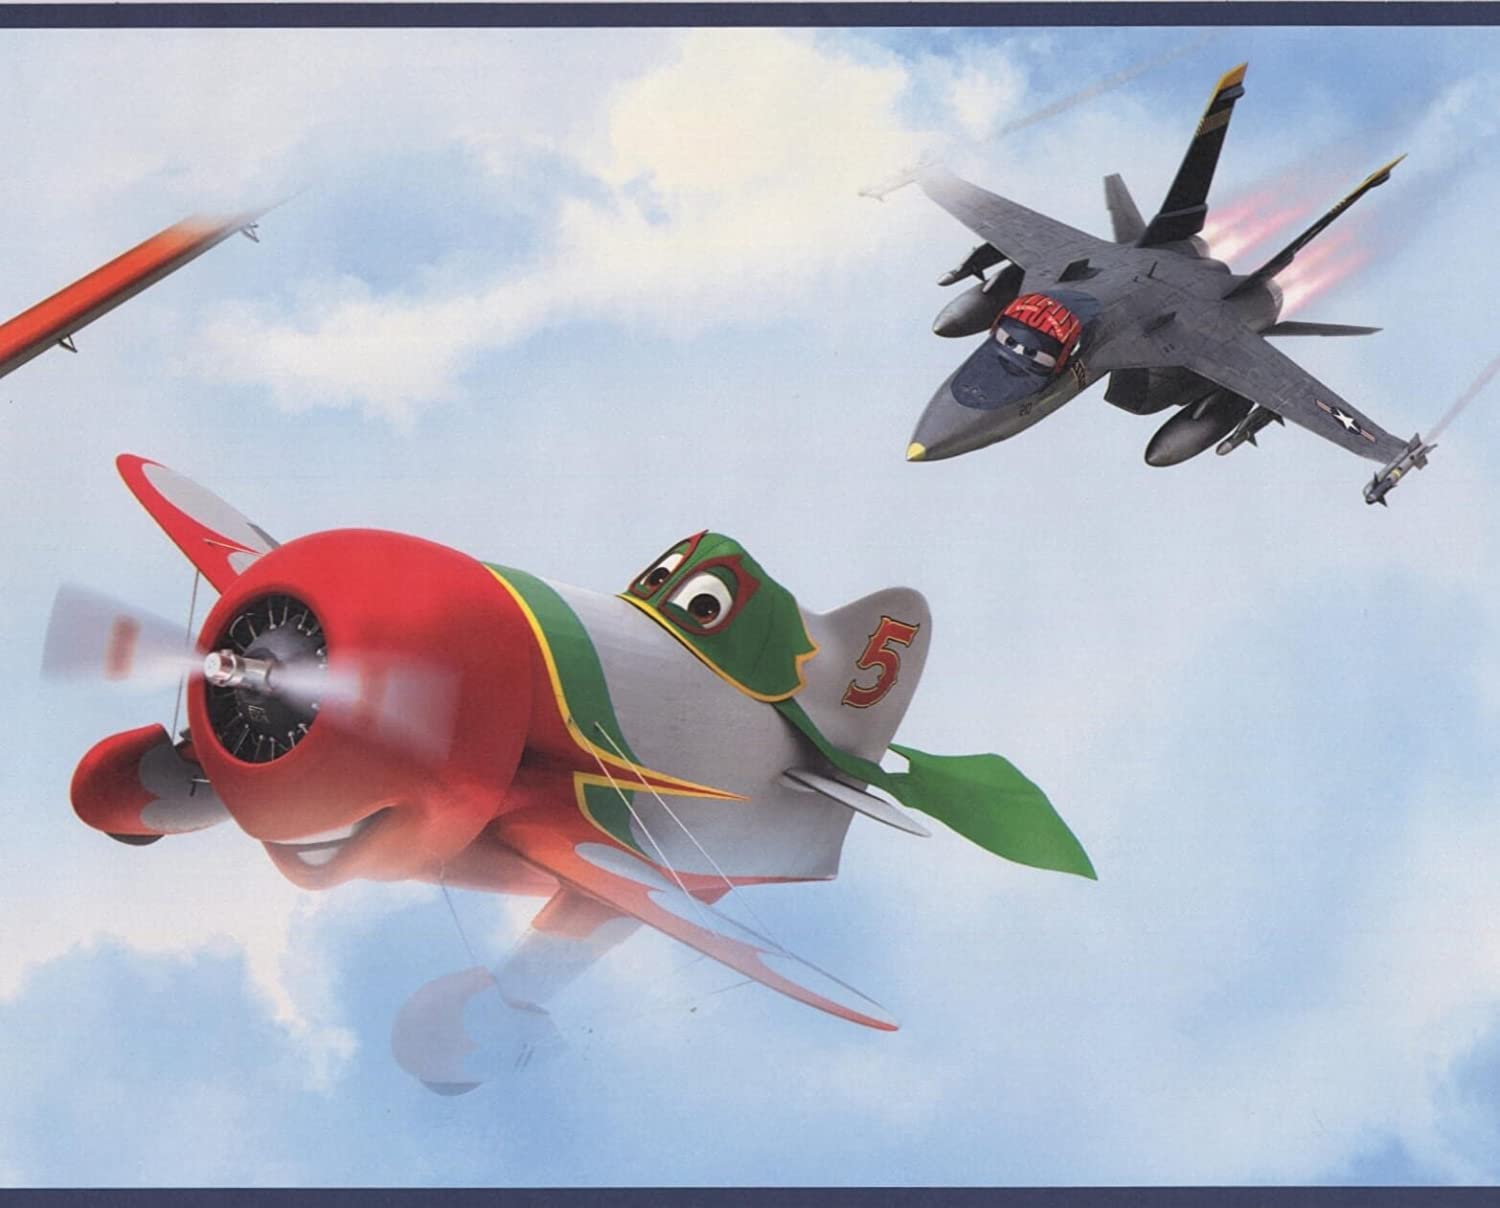 Disney Planes in the Sky Clouds Kids Wallpaper Border Retro Design